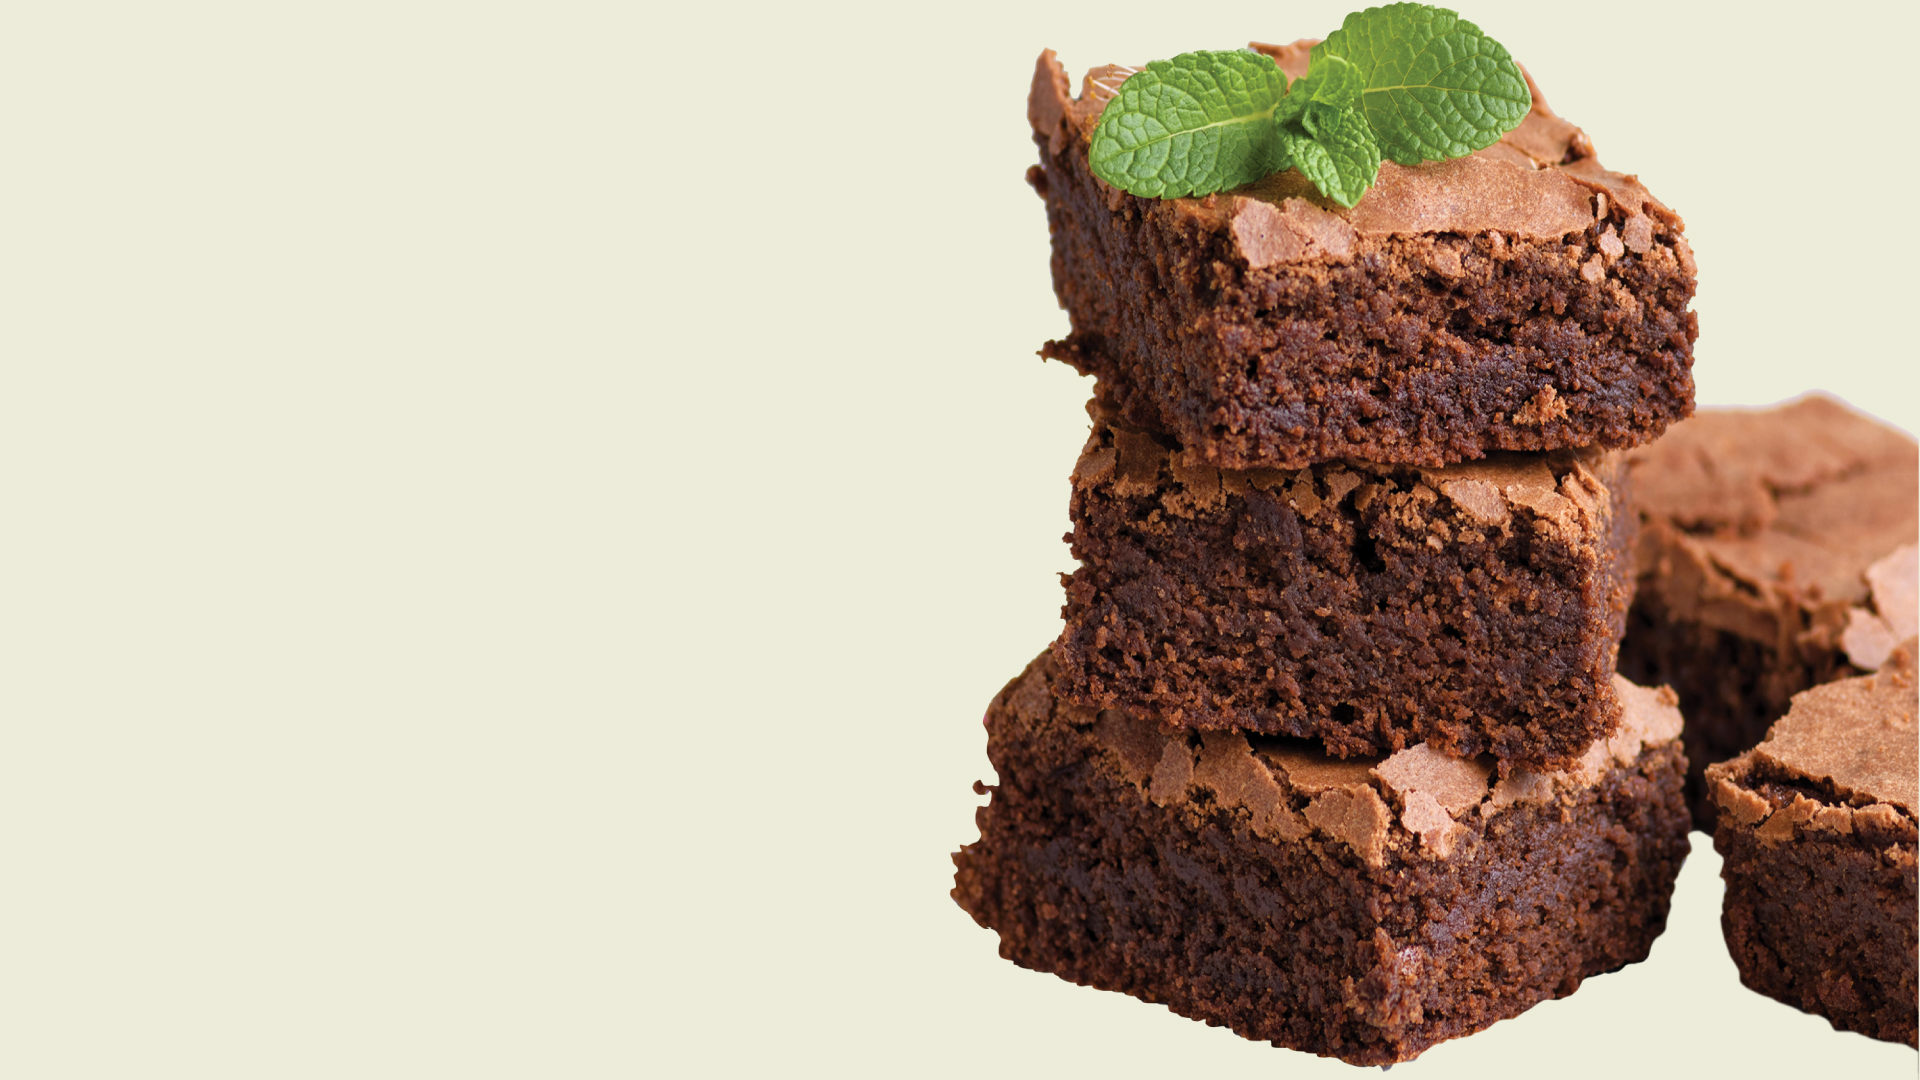 Featured image for “Vegan Avocado Chocolate Brownies”